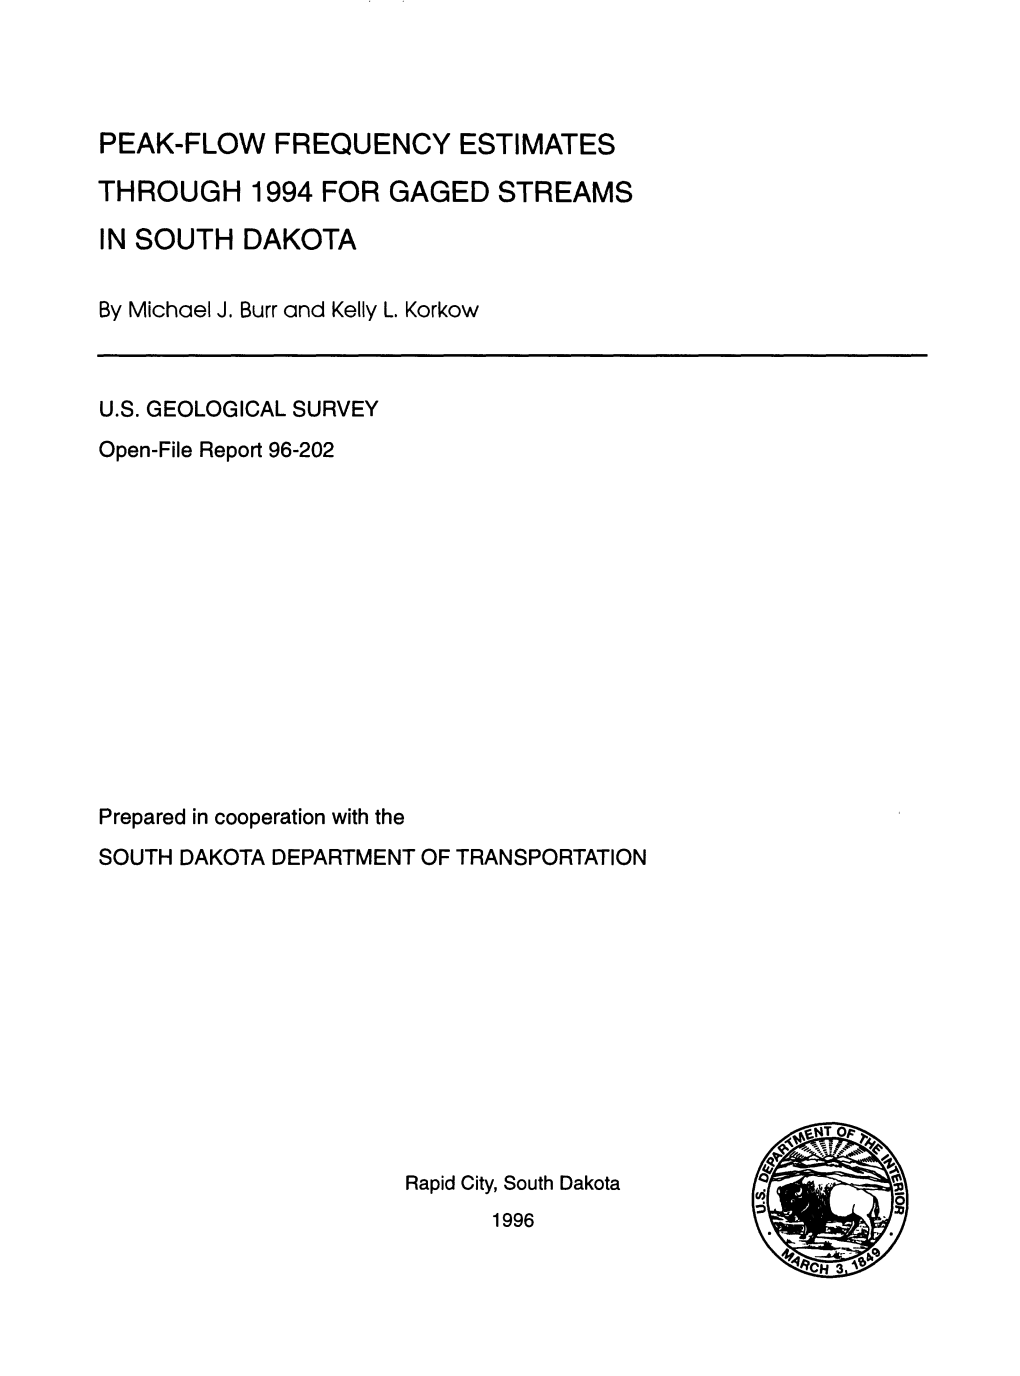 Peak-Flow Frequency Estimates Through 1994 for Gaged Streams in South Dakota